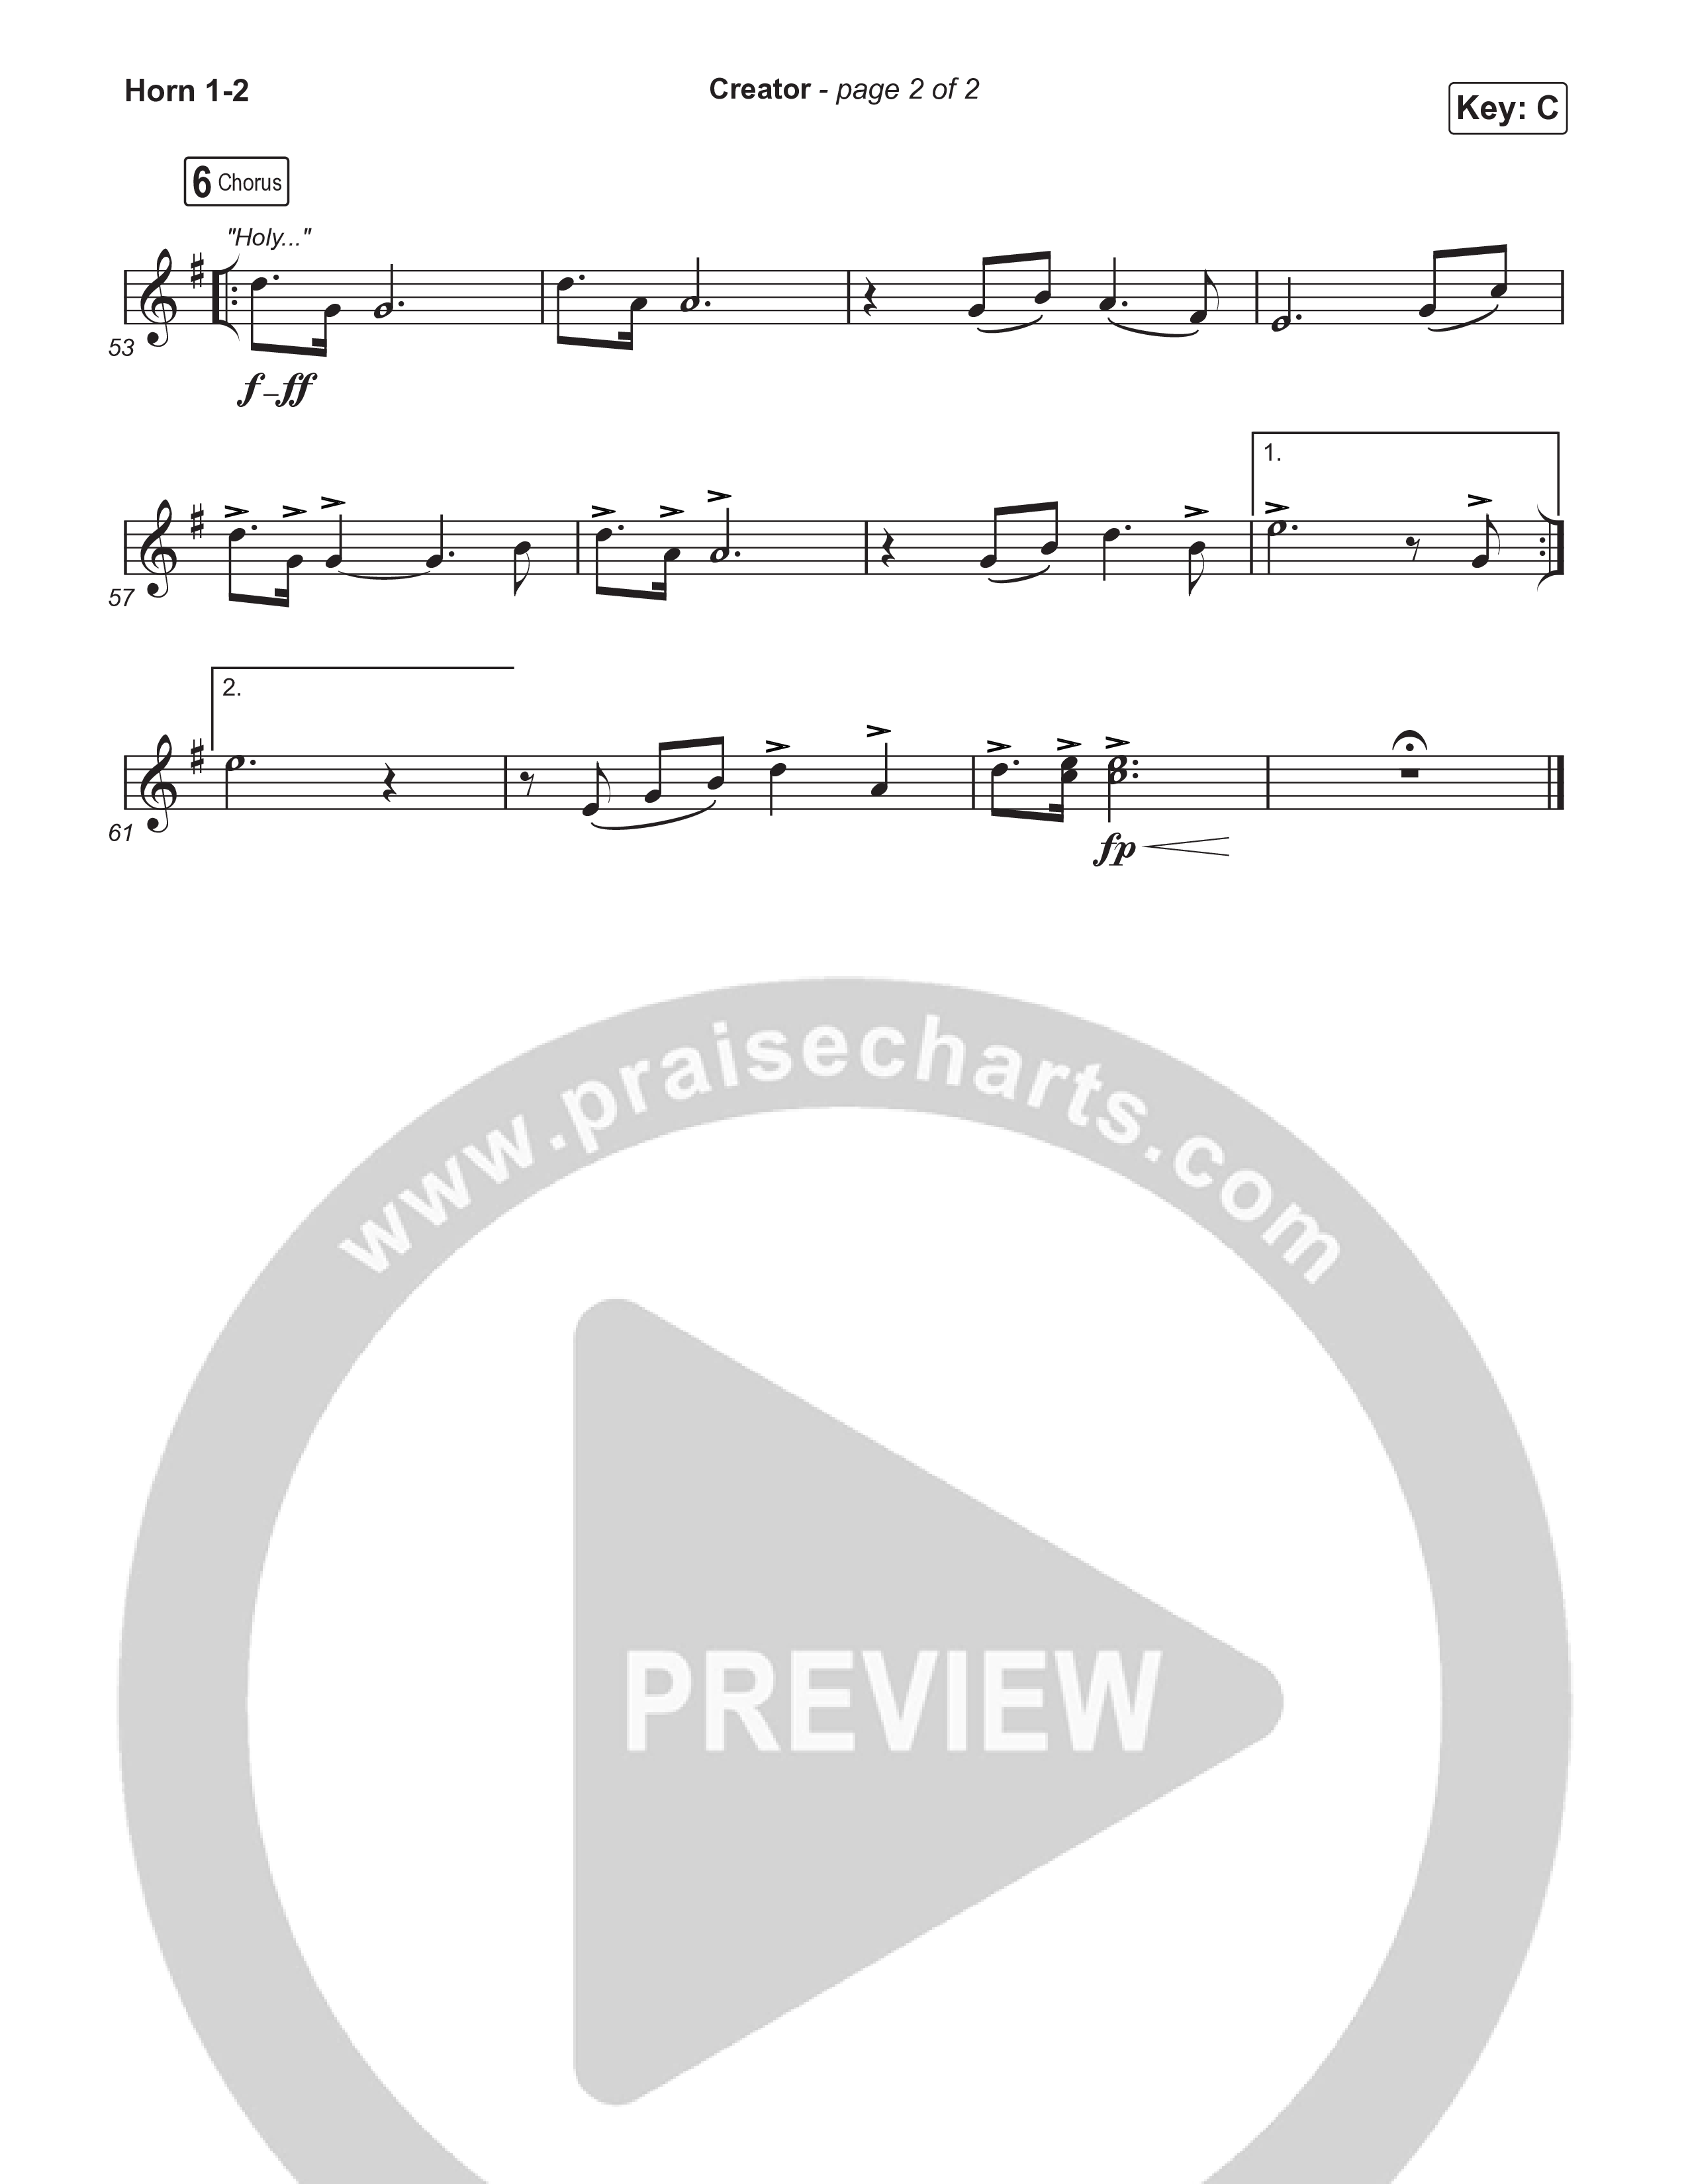 Creator (Worship Choir/SAB) Brass Pack (Phil Wickham)